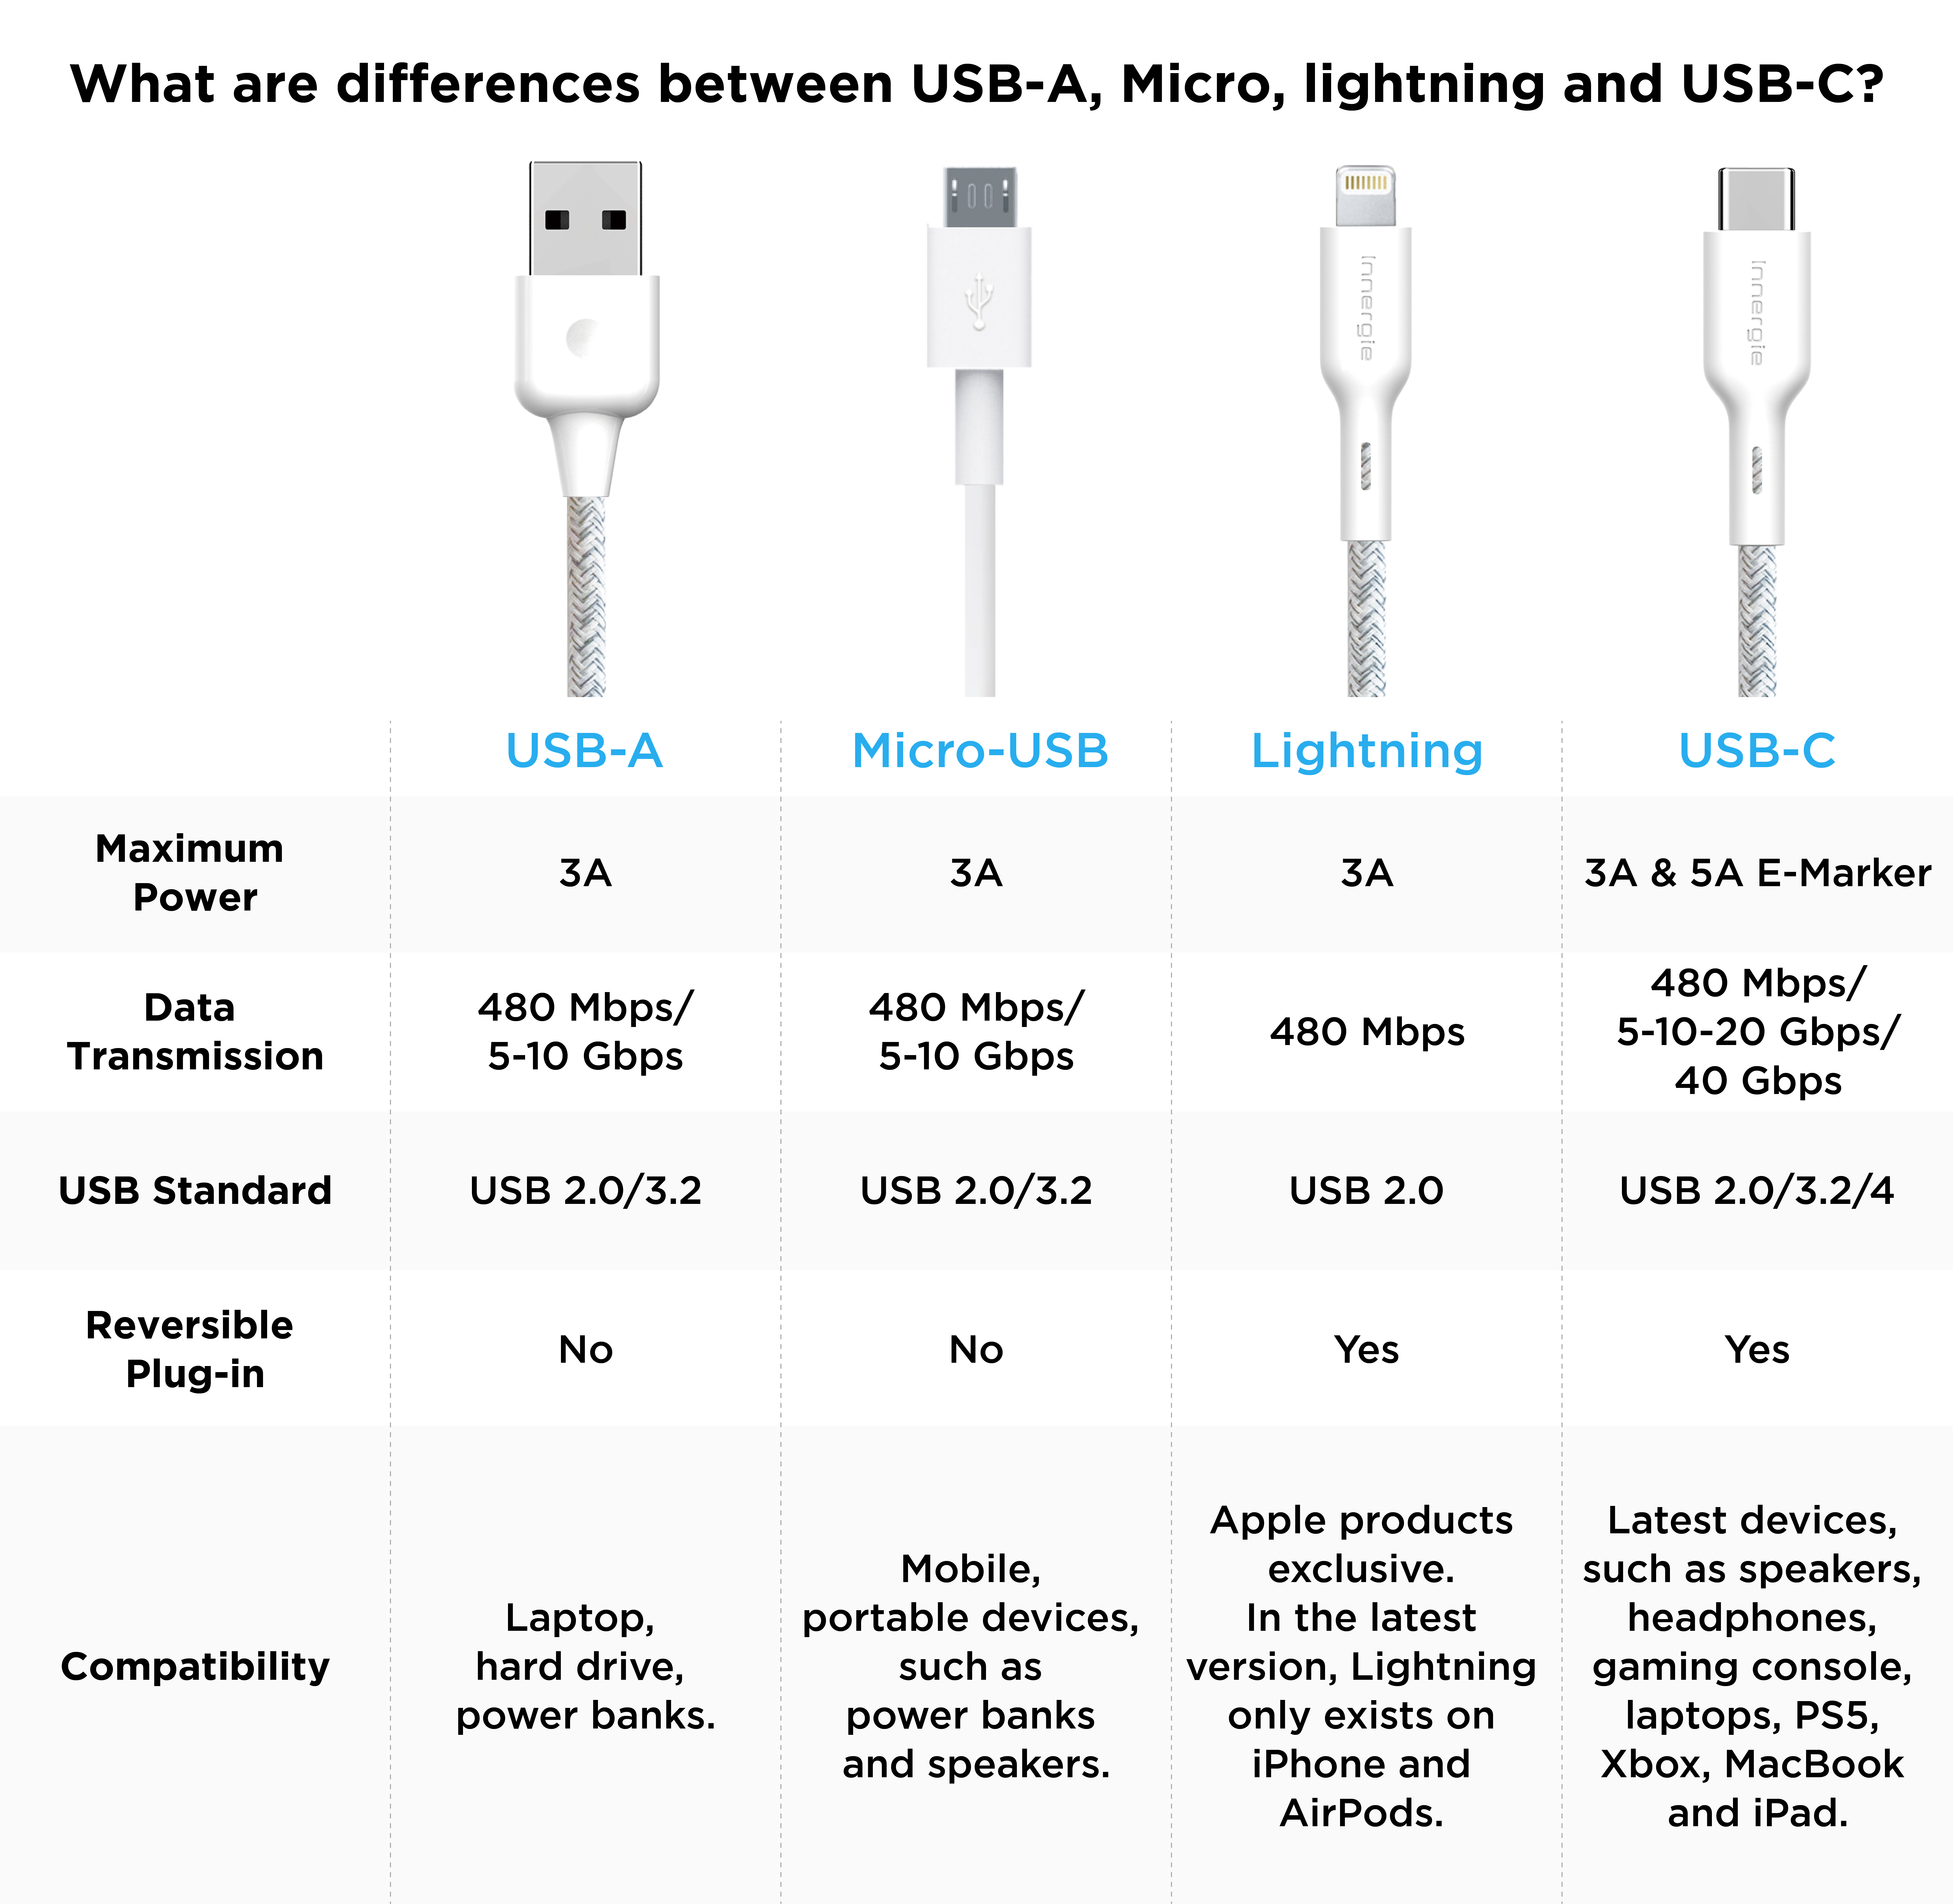 TRIPLE TIP CHARGING CABLE (USB-A to [Micro USB-B / Lightning / USB-C])